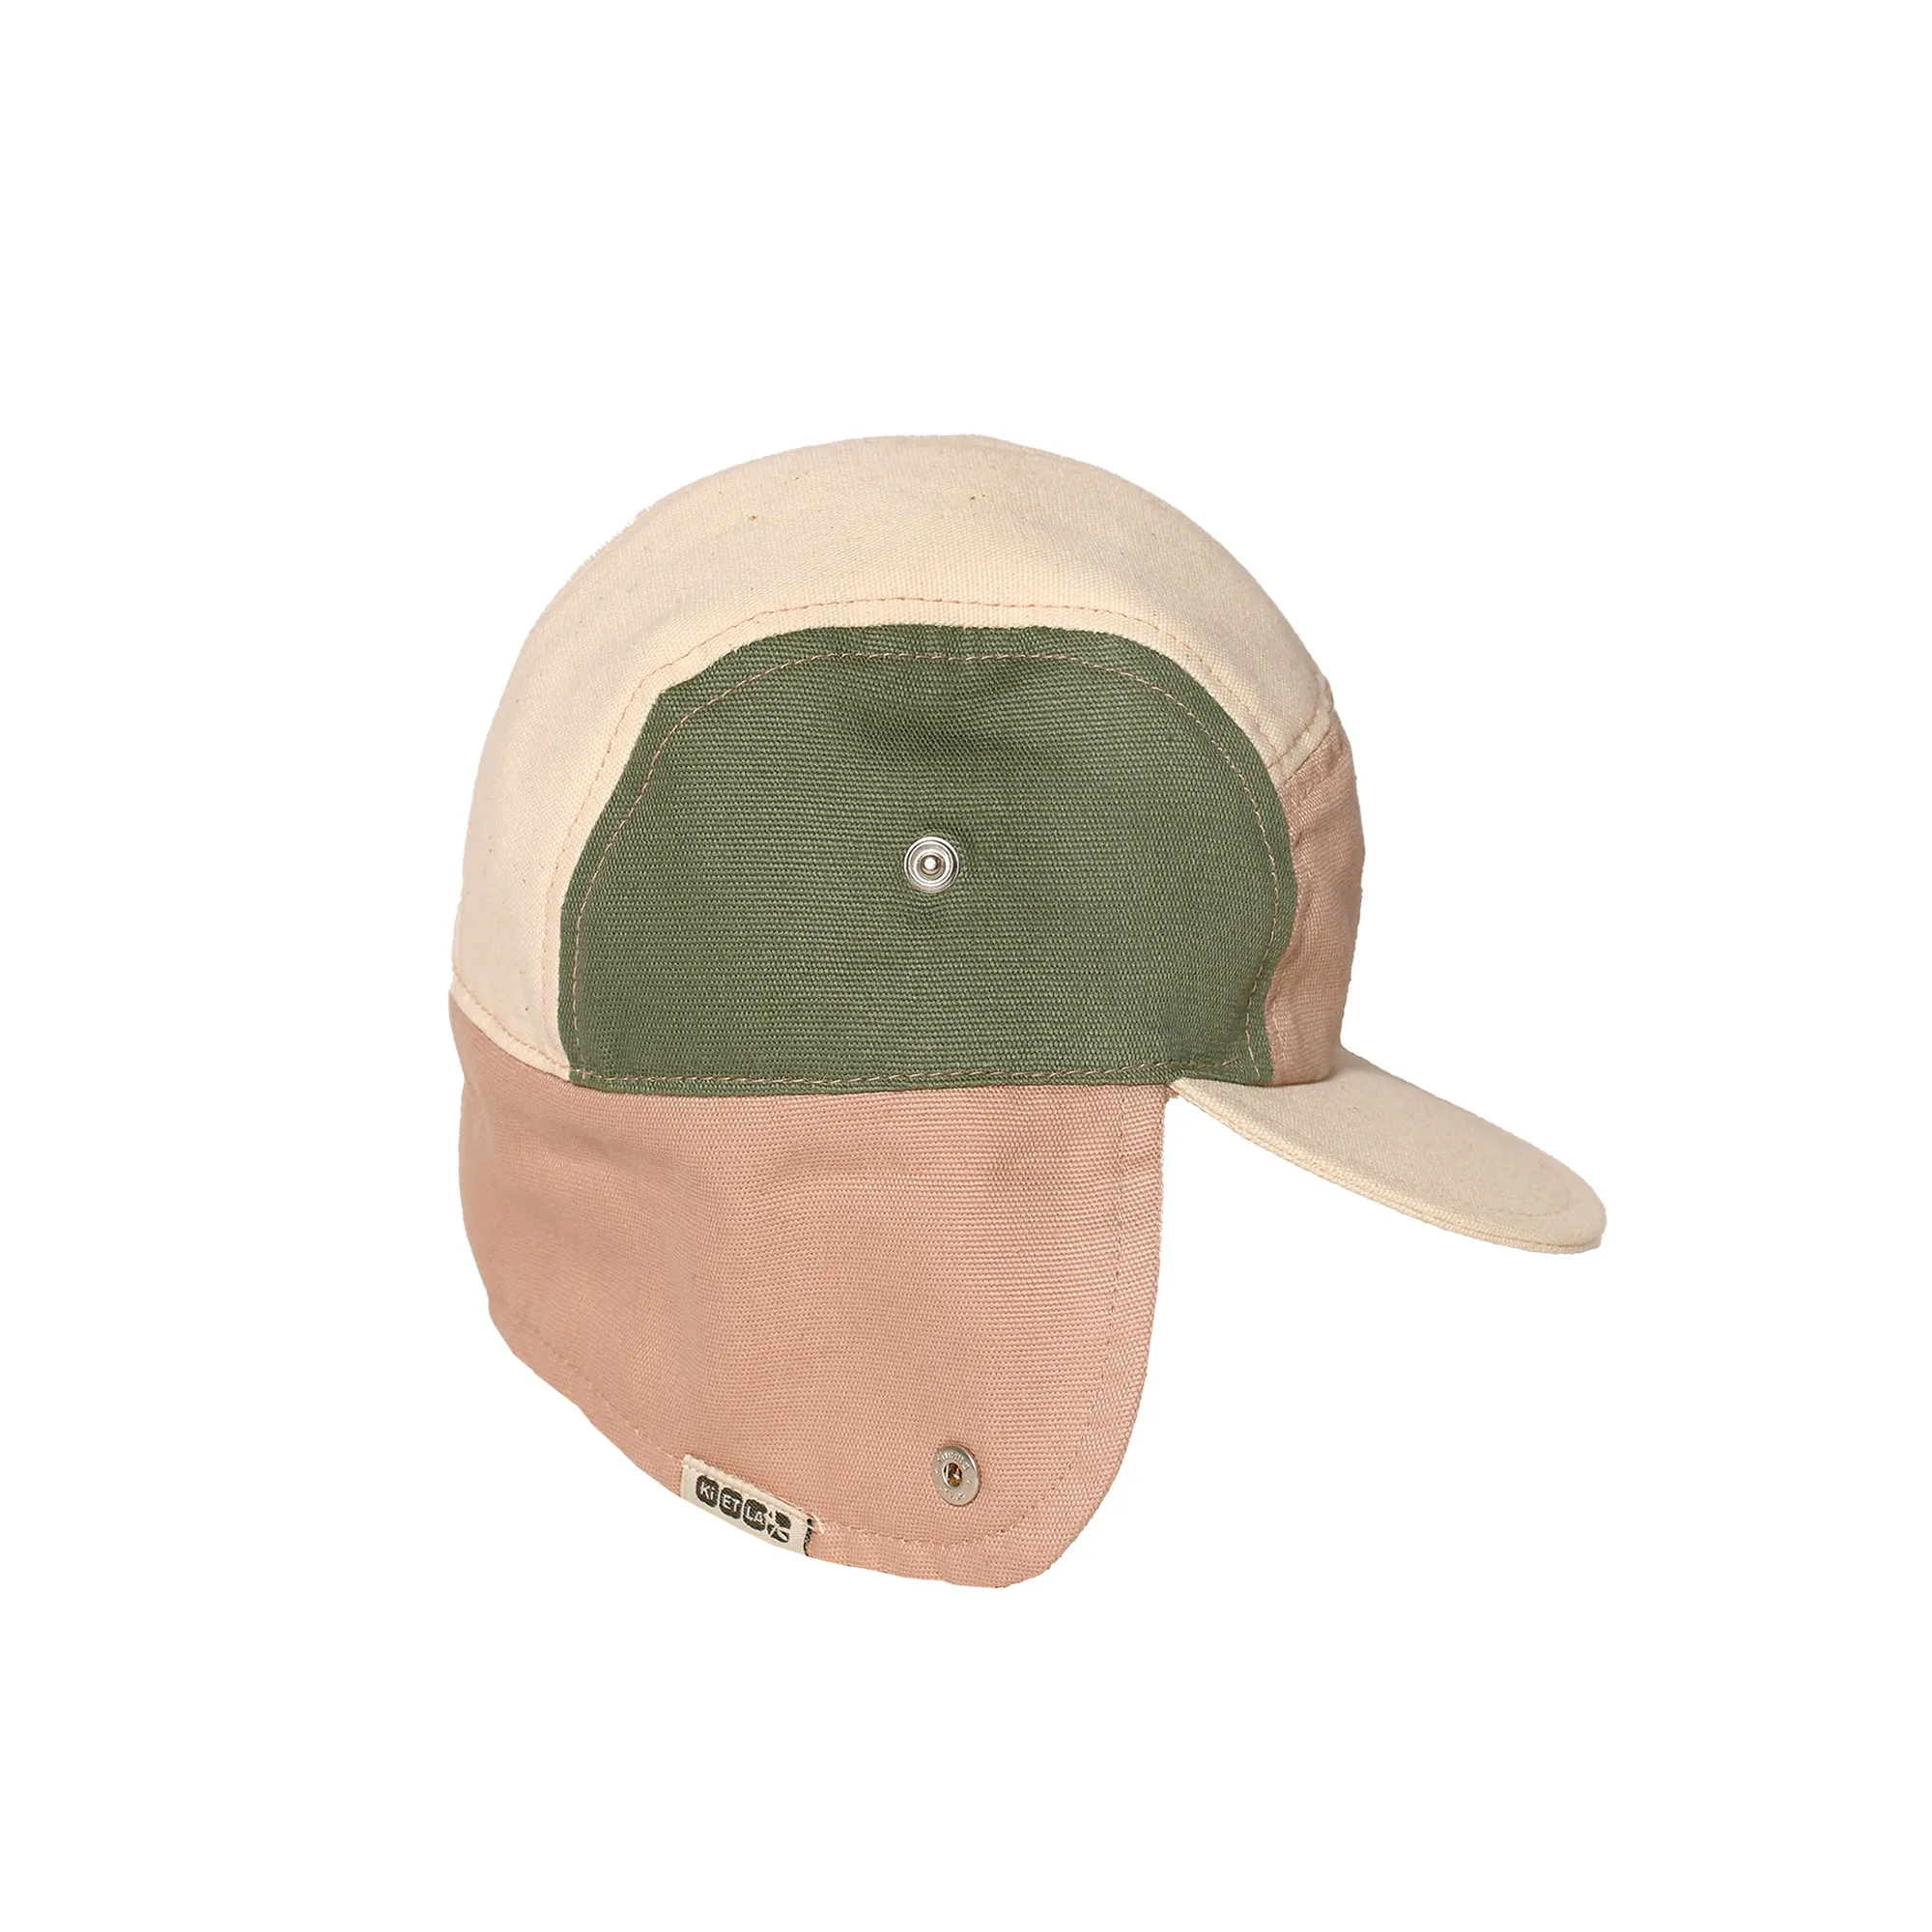 KiETLA šiltovka s ochranou krku s UV ochranou 2-4 roky - Green / Natural / Pink 1×1 ks, detská šiltovka